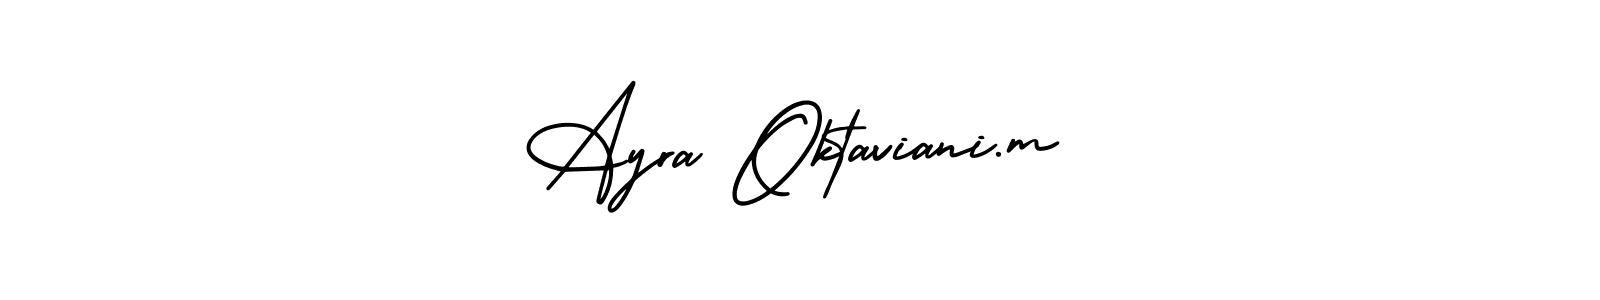 How to Draw Ayra Oktaviani.m signature style? AmerikaSignatureDemo-Regular is a latest design signature styles for name Ayra Oktaviani.m. Ayra Oktaviani.m signature style 3 images and pictures png